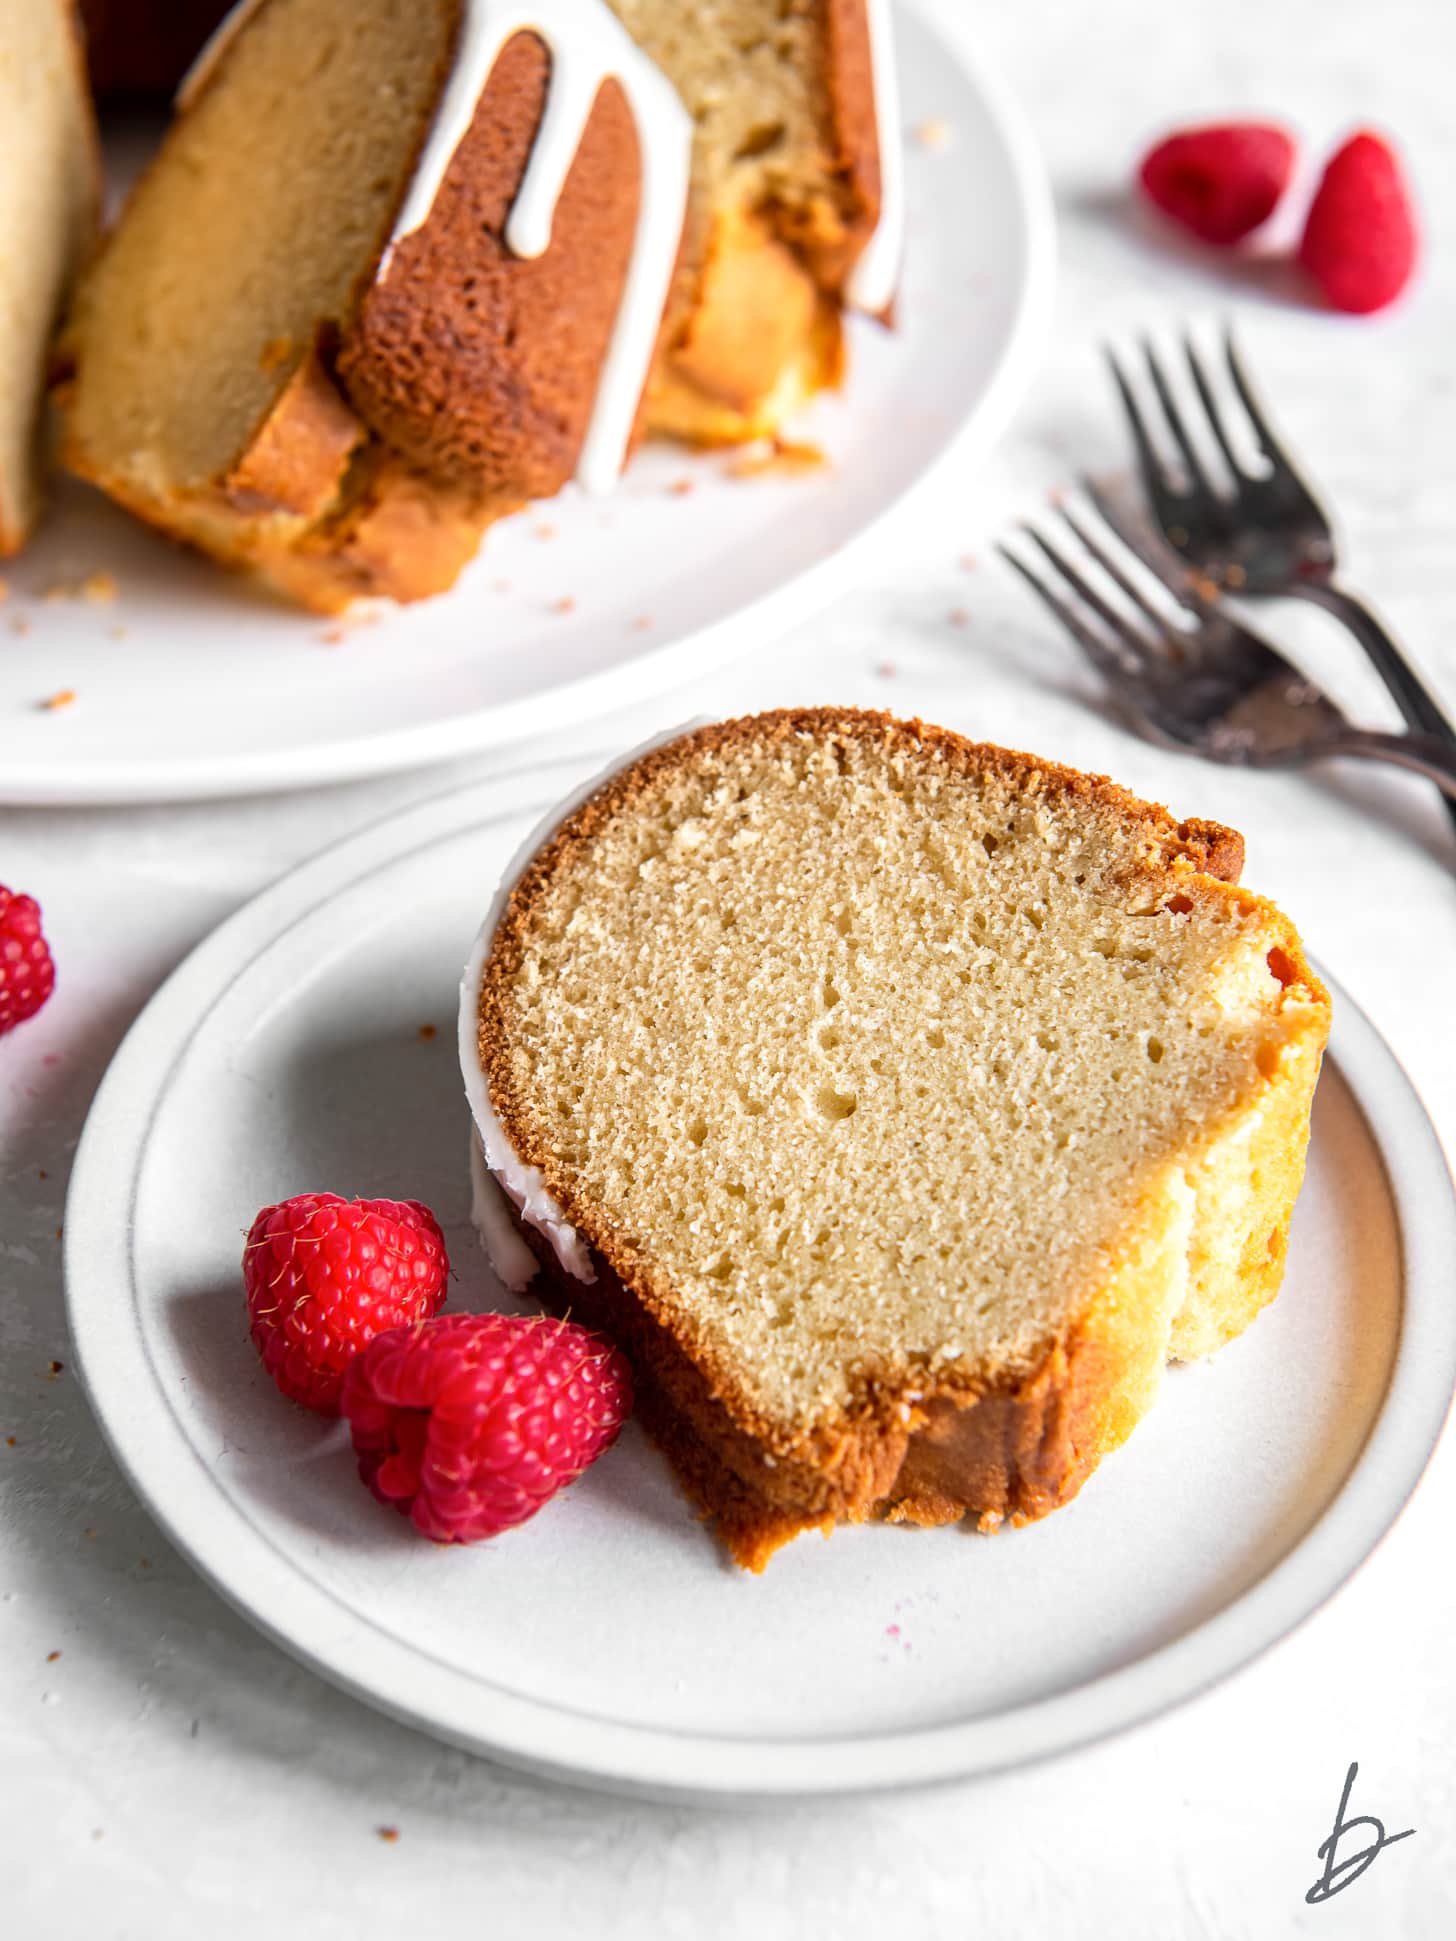 slice of vanilla bundt cake on plate with two raspberries.